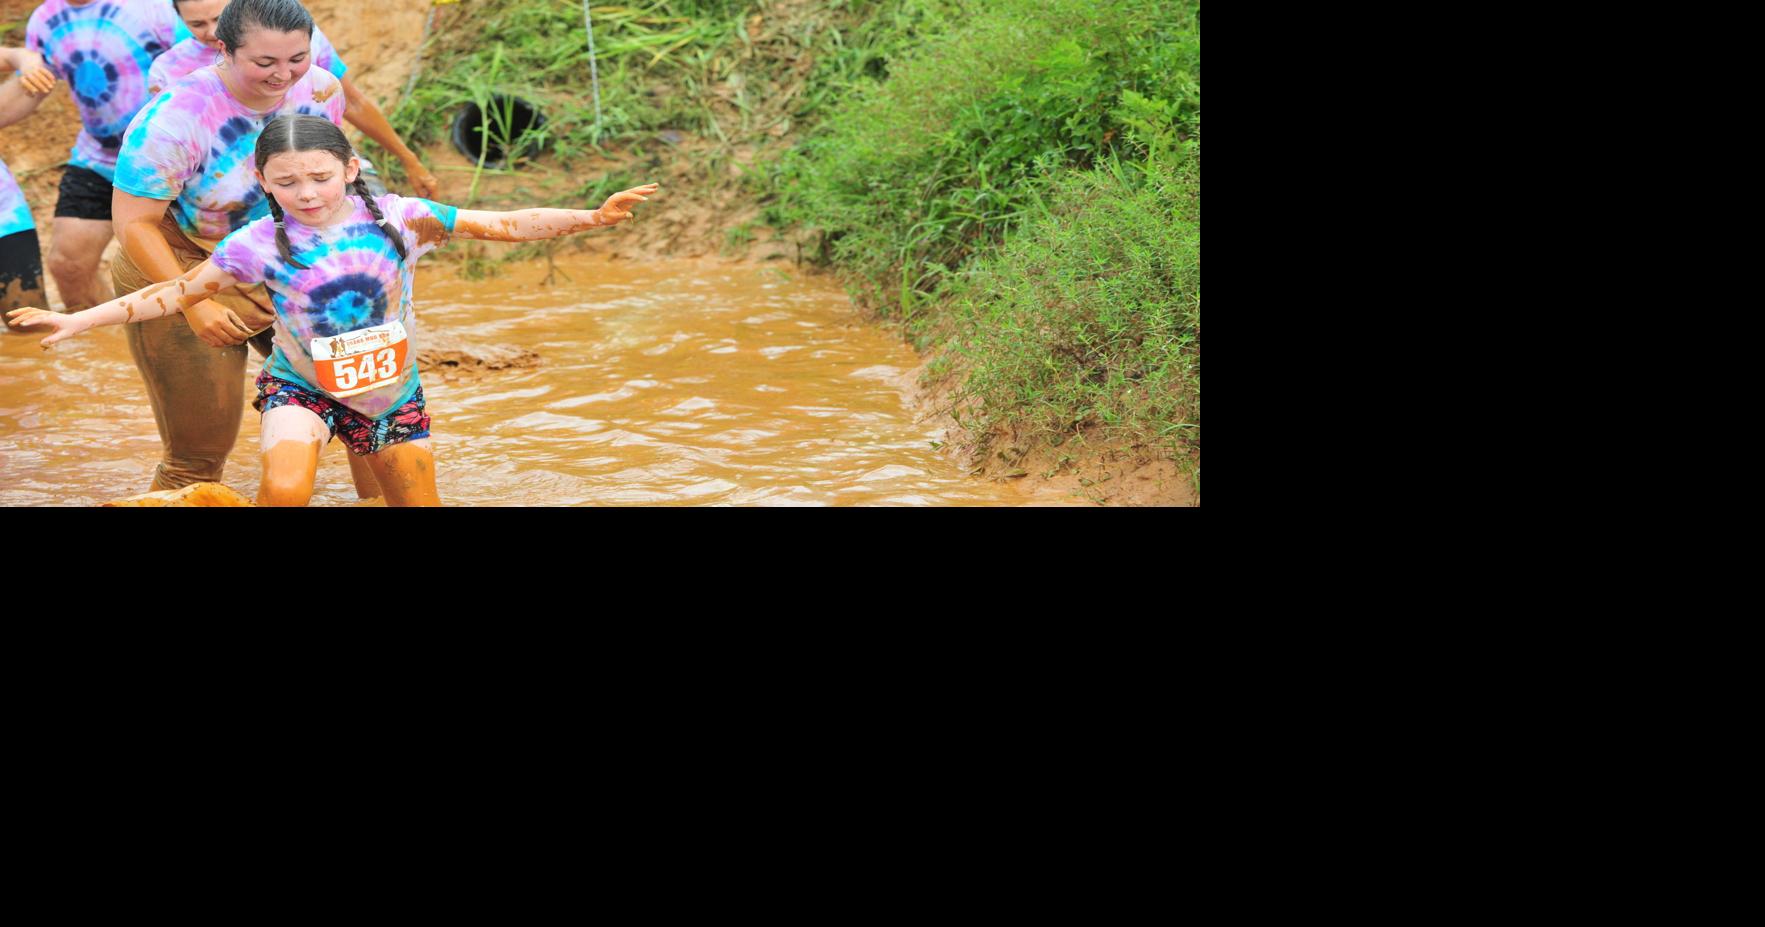 Ohana Mud Run aims to rekindle childhood spirit